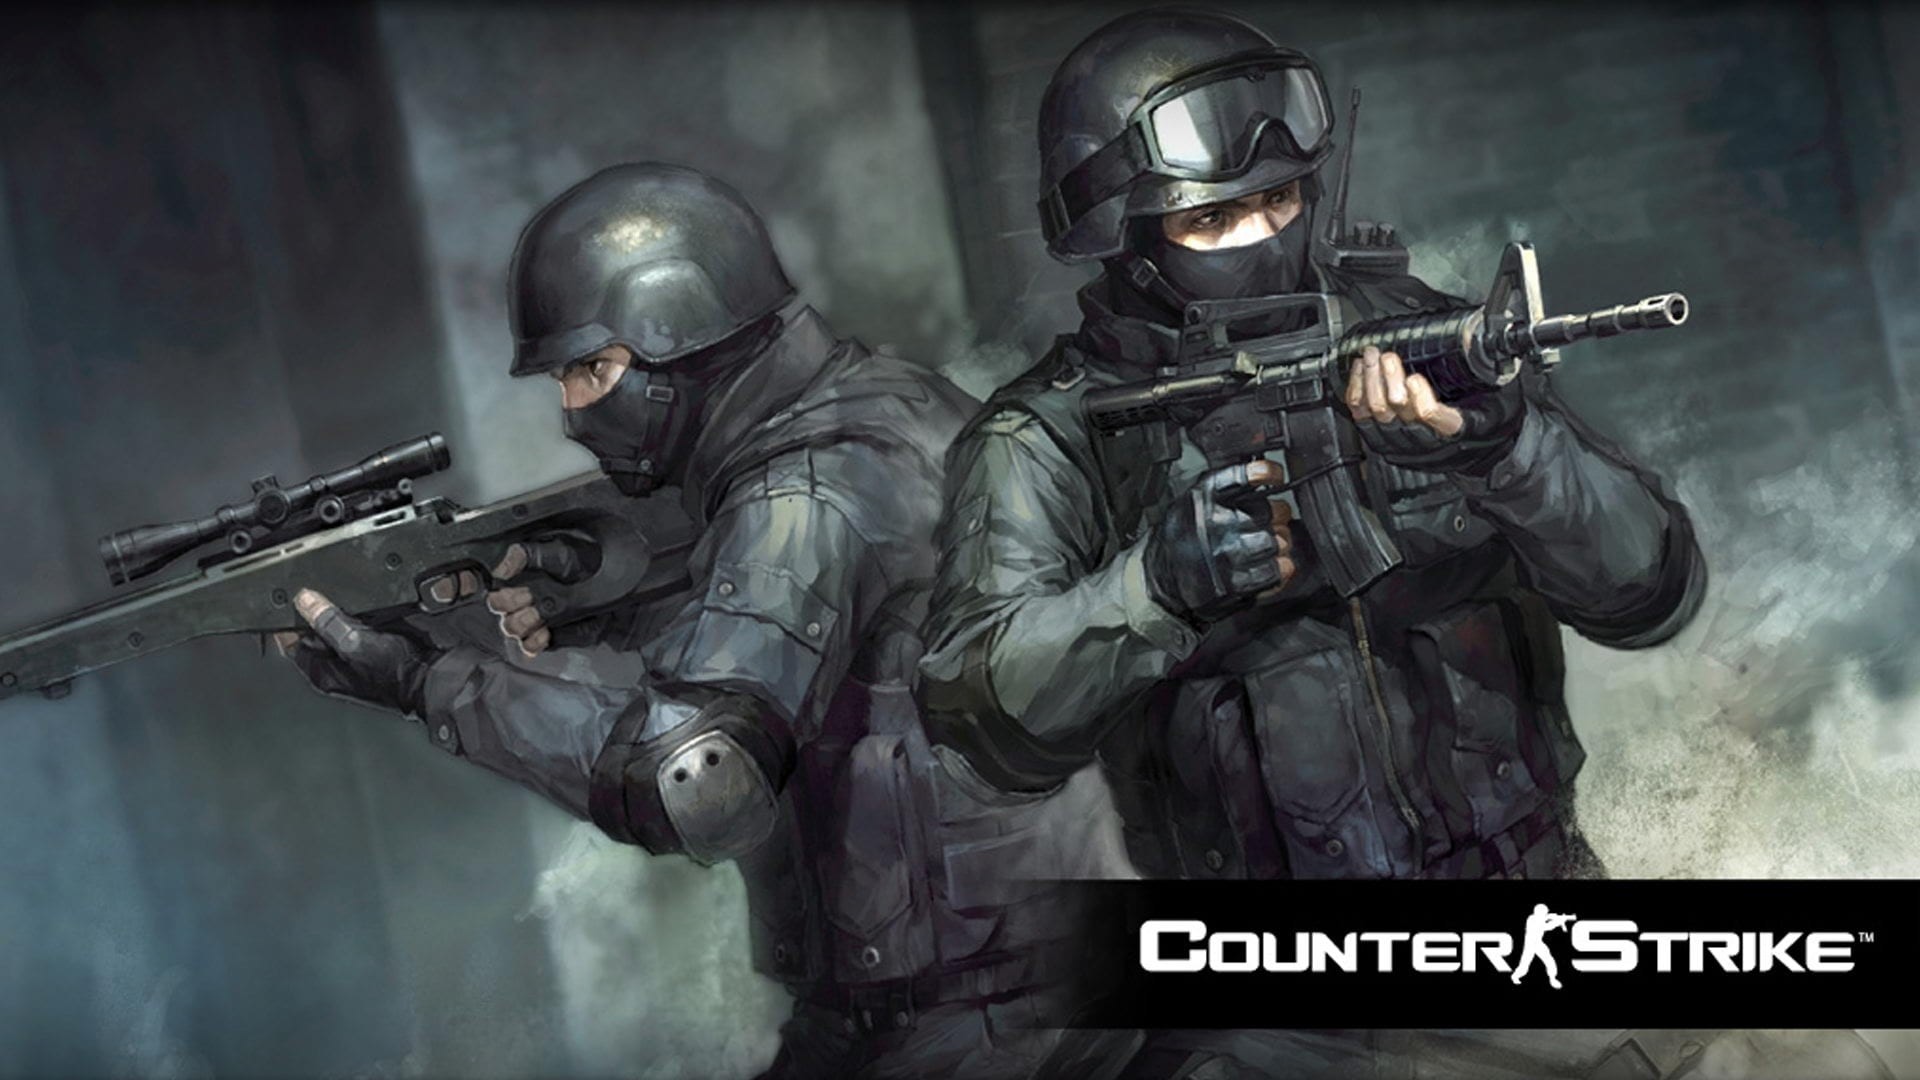 Counter Strike wallpaper ·① Download free beautiful full ...